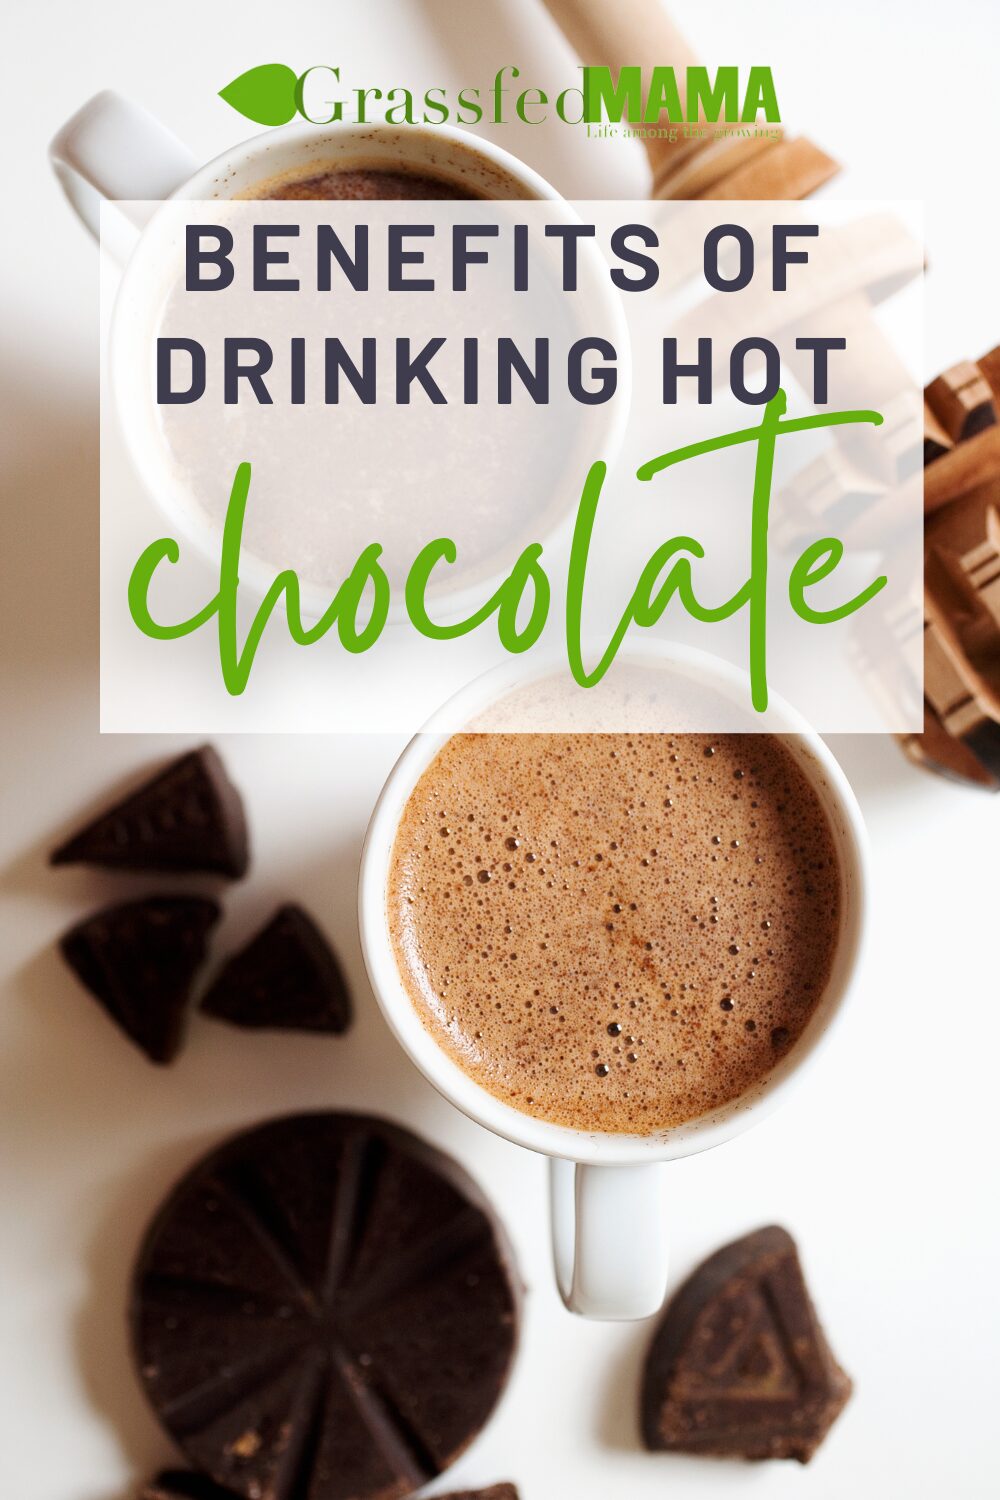 Benefits of Drinking Hot Chocolate